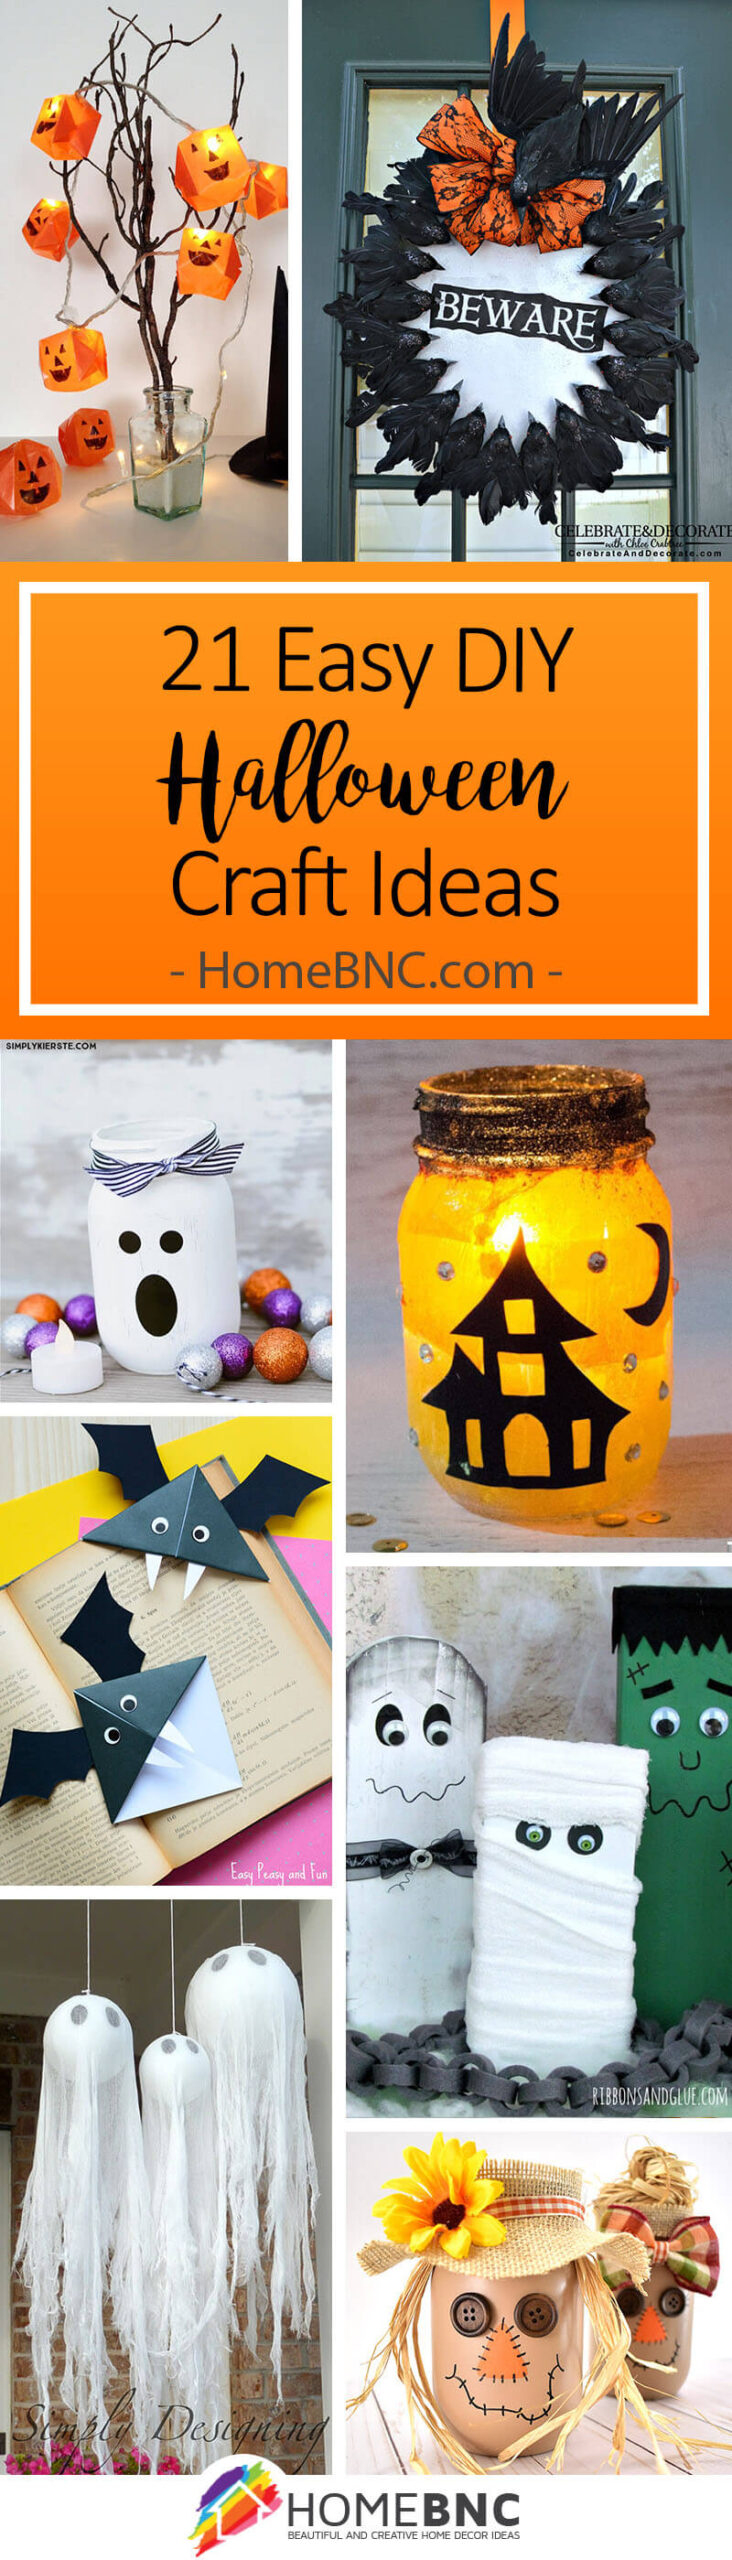 Easy DIY Halloween Craft Ideas